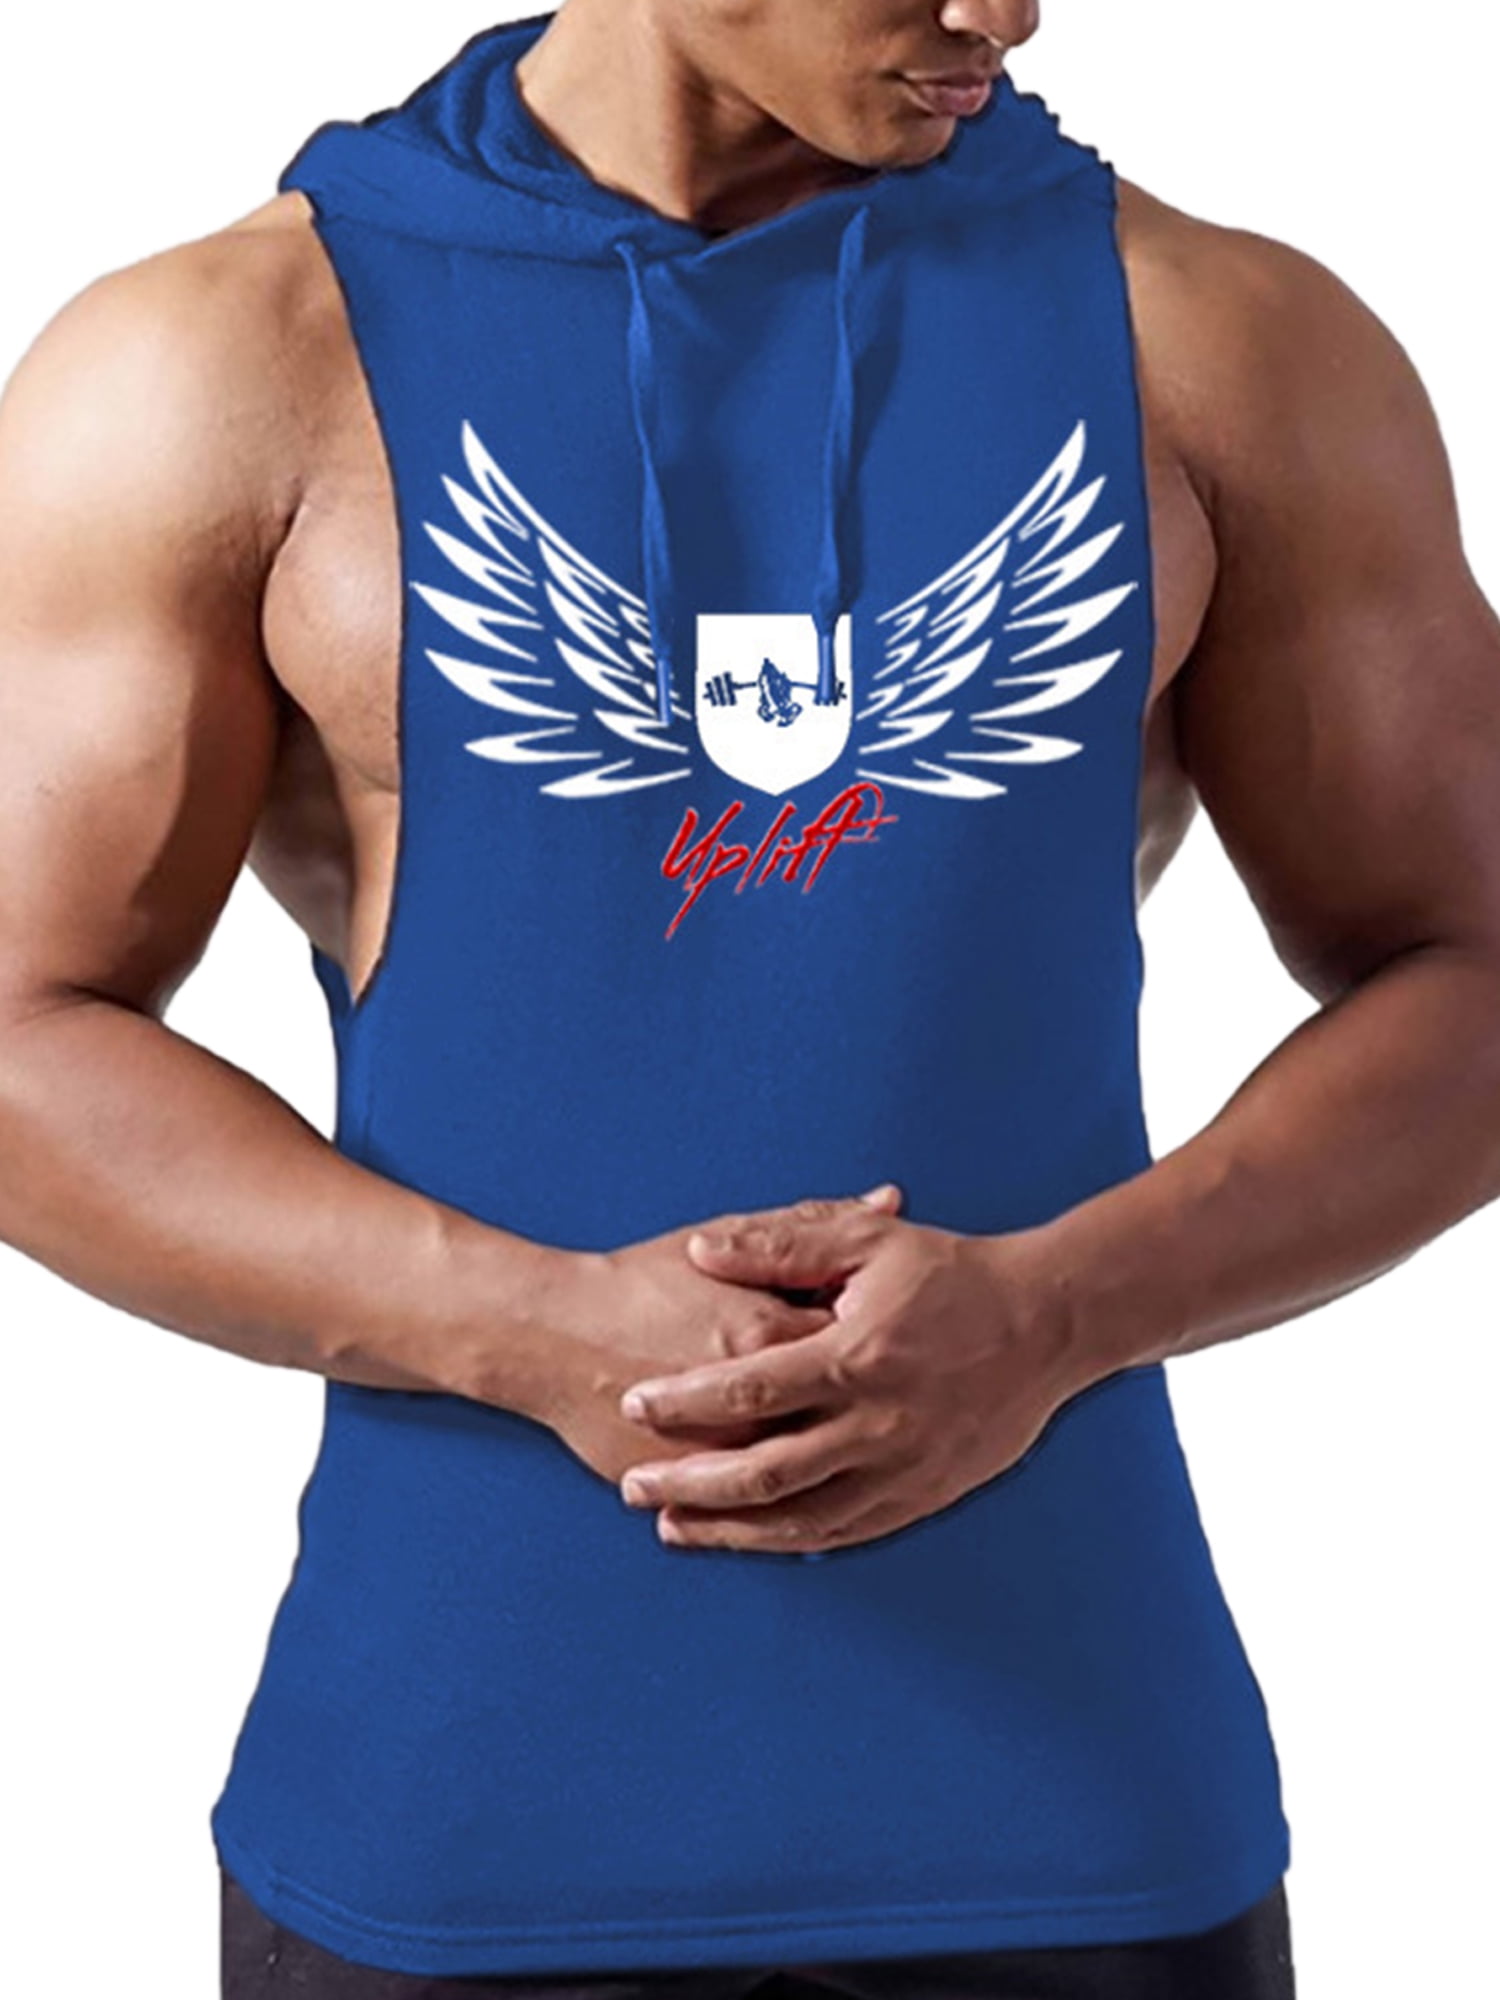 Details about   Men's Gym Tank Tops Sleeveless Workout Tee Fitness Bodybuilding Shirt Sleeveless 